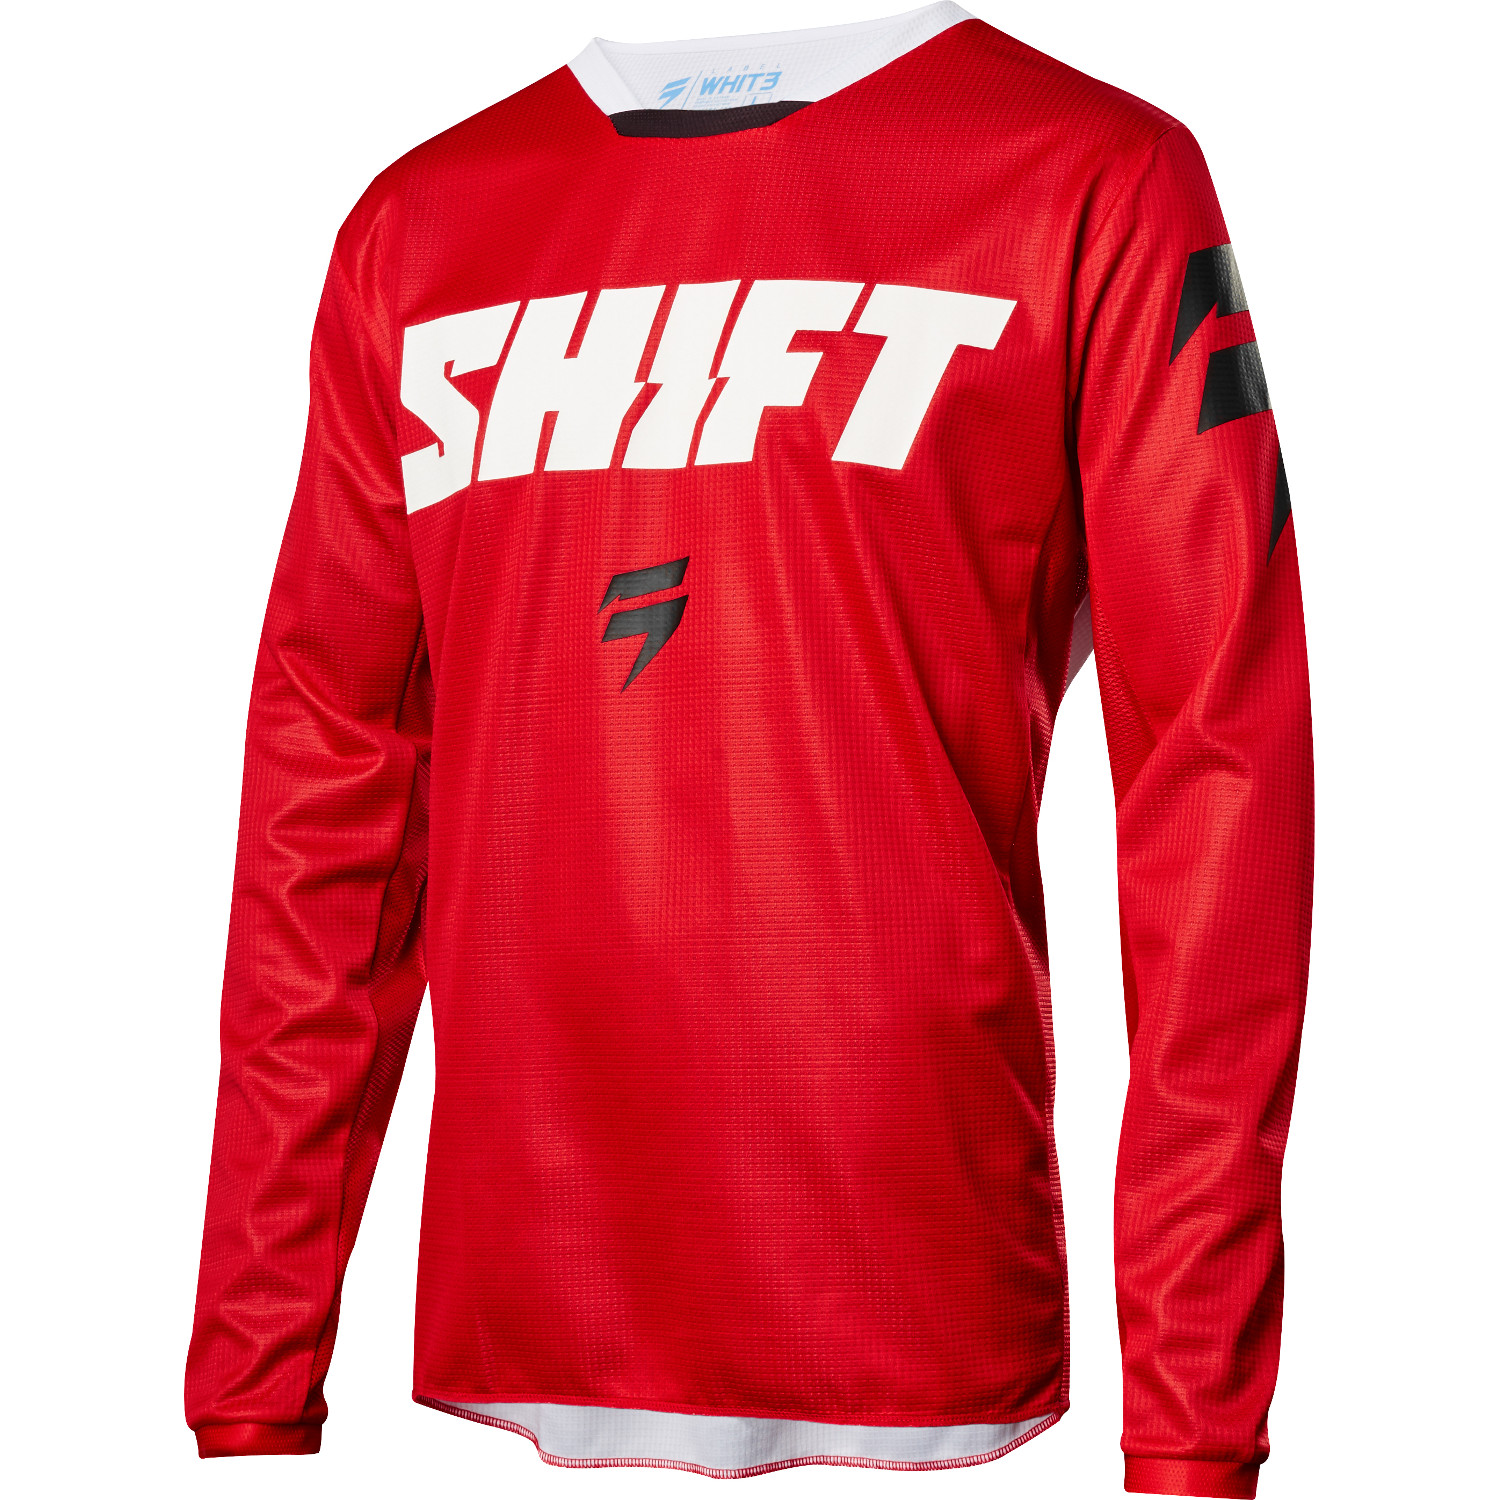 Shift Jersey Whit3 Label Ninety Seven - Rot